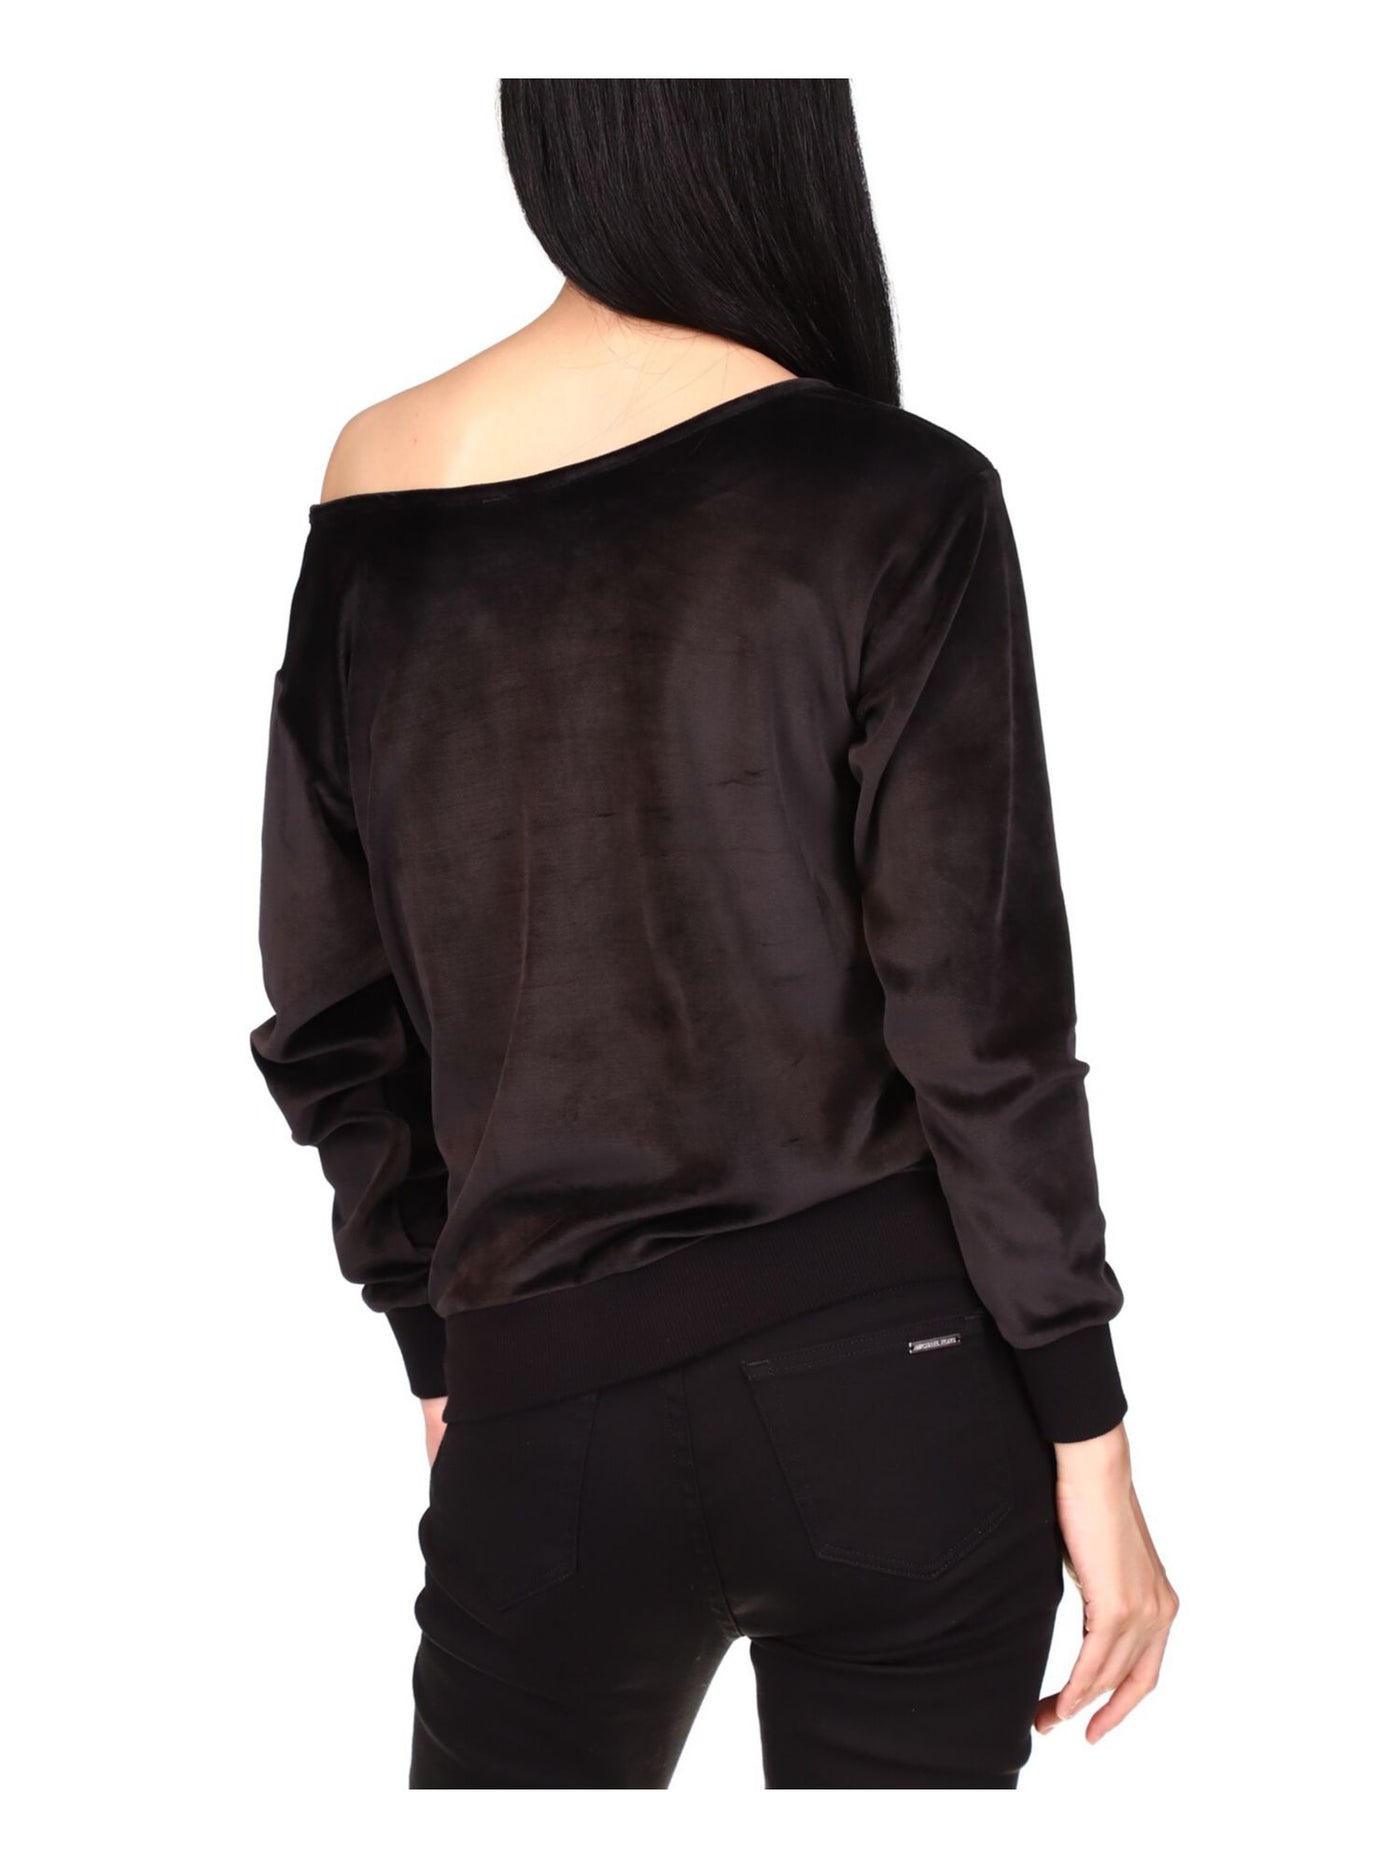 MICHAEL MICHAEL KORS Womens Black Long Sleeve Asymmetrical Neckline Top S